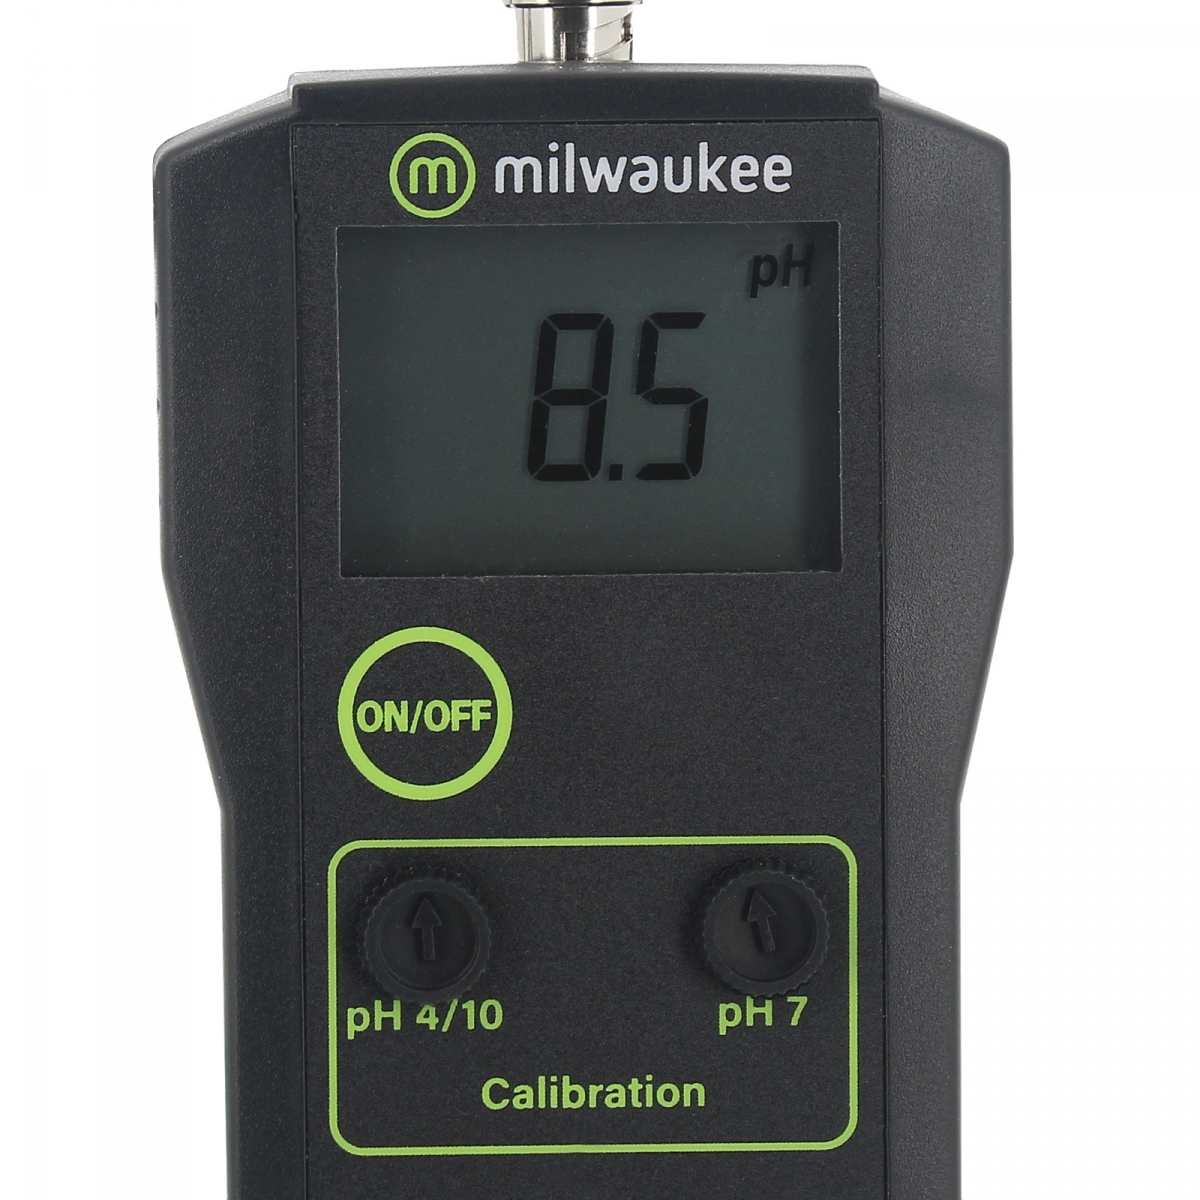 Achetez le pH-mètre avec sonde Milwaukee MW100